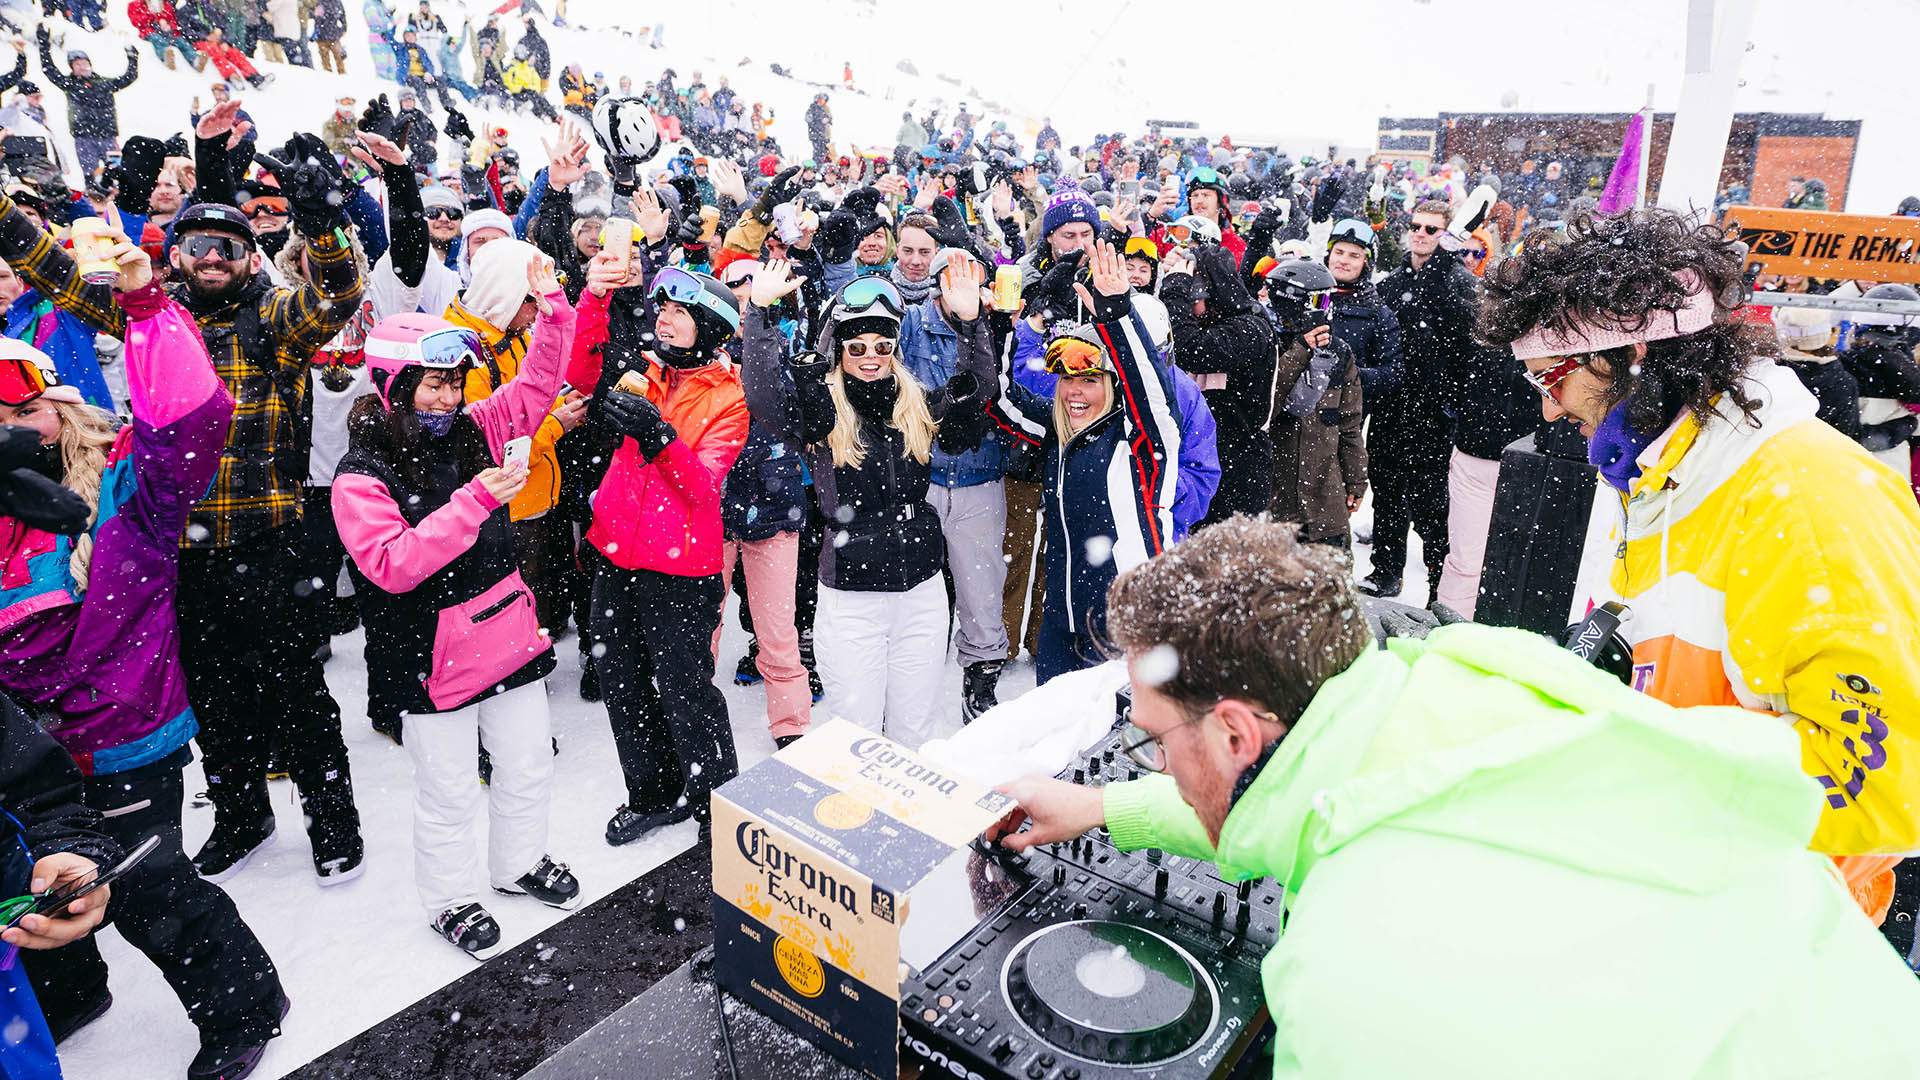 Start Planning a Ski Trip: Queenstown's Alpine Music Fest Snow Machine Has Dropped Its 2023 Lineup